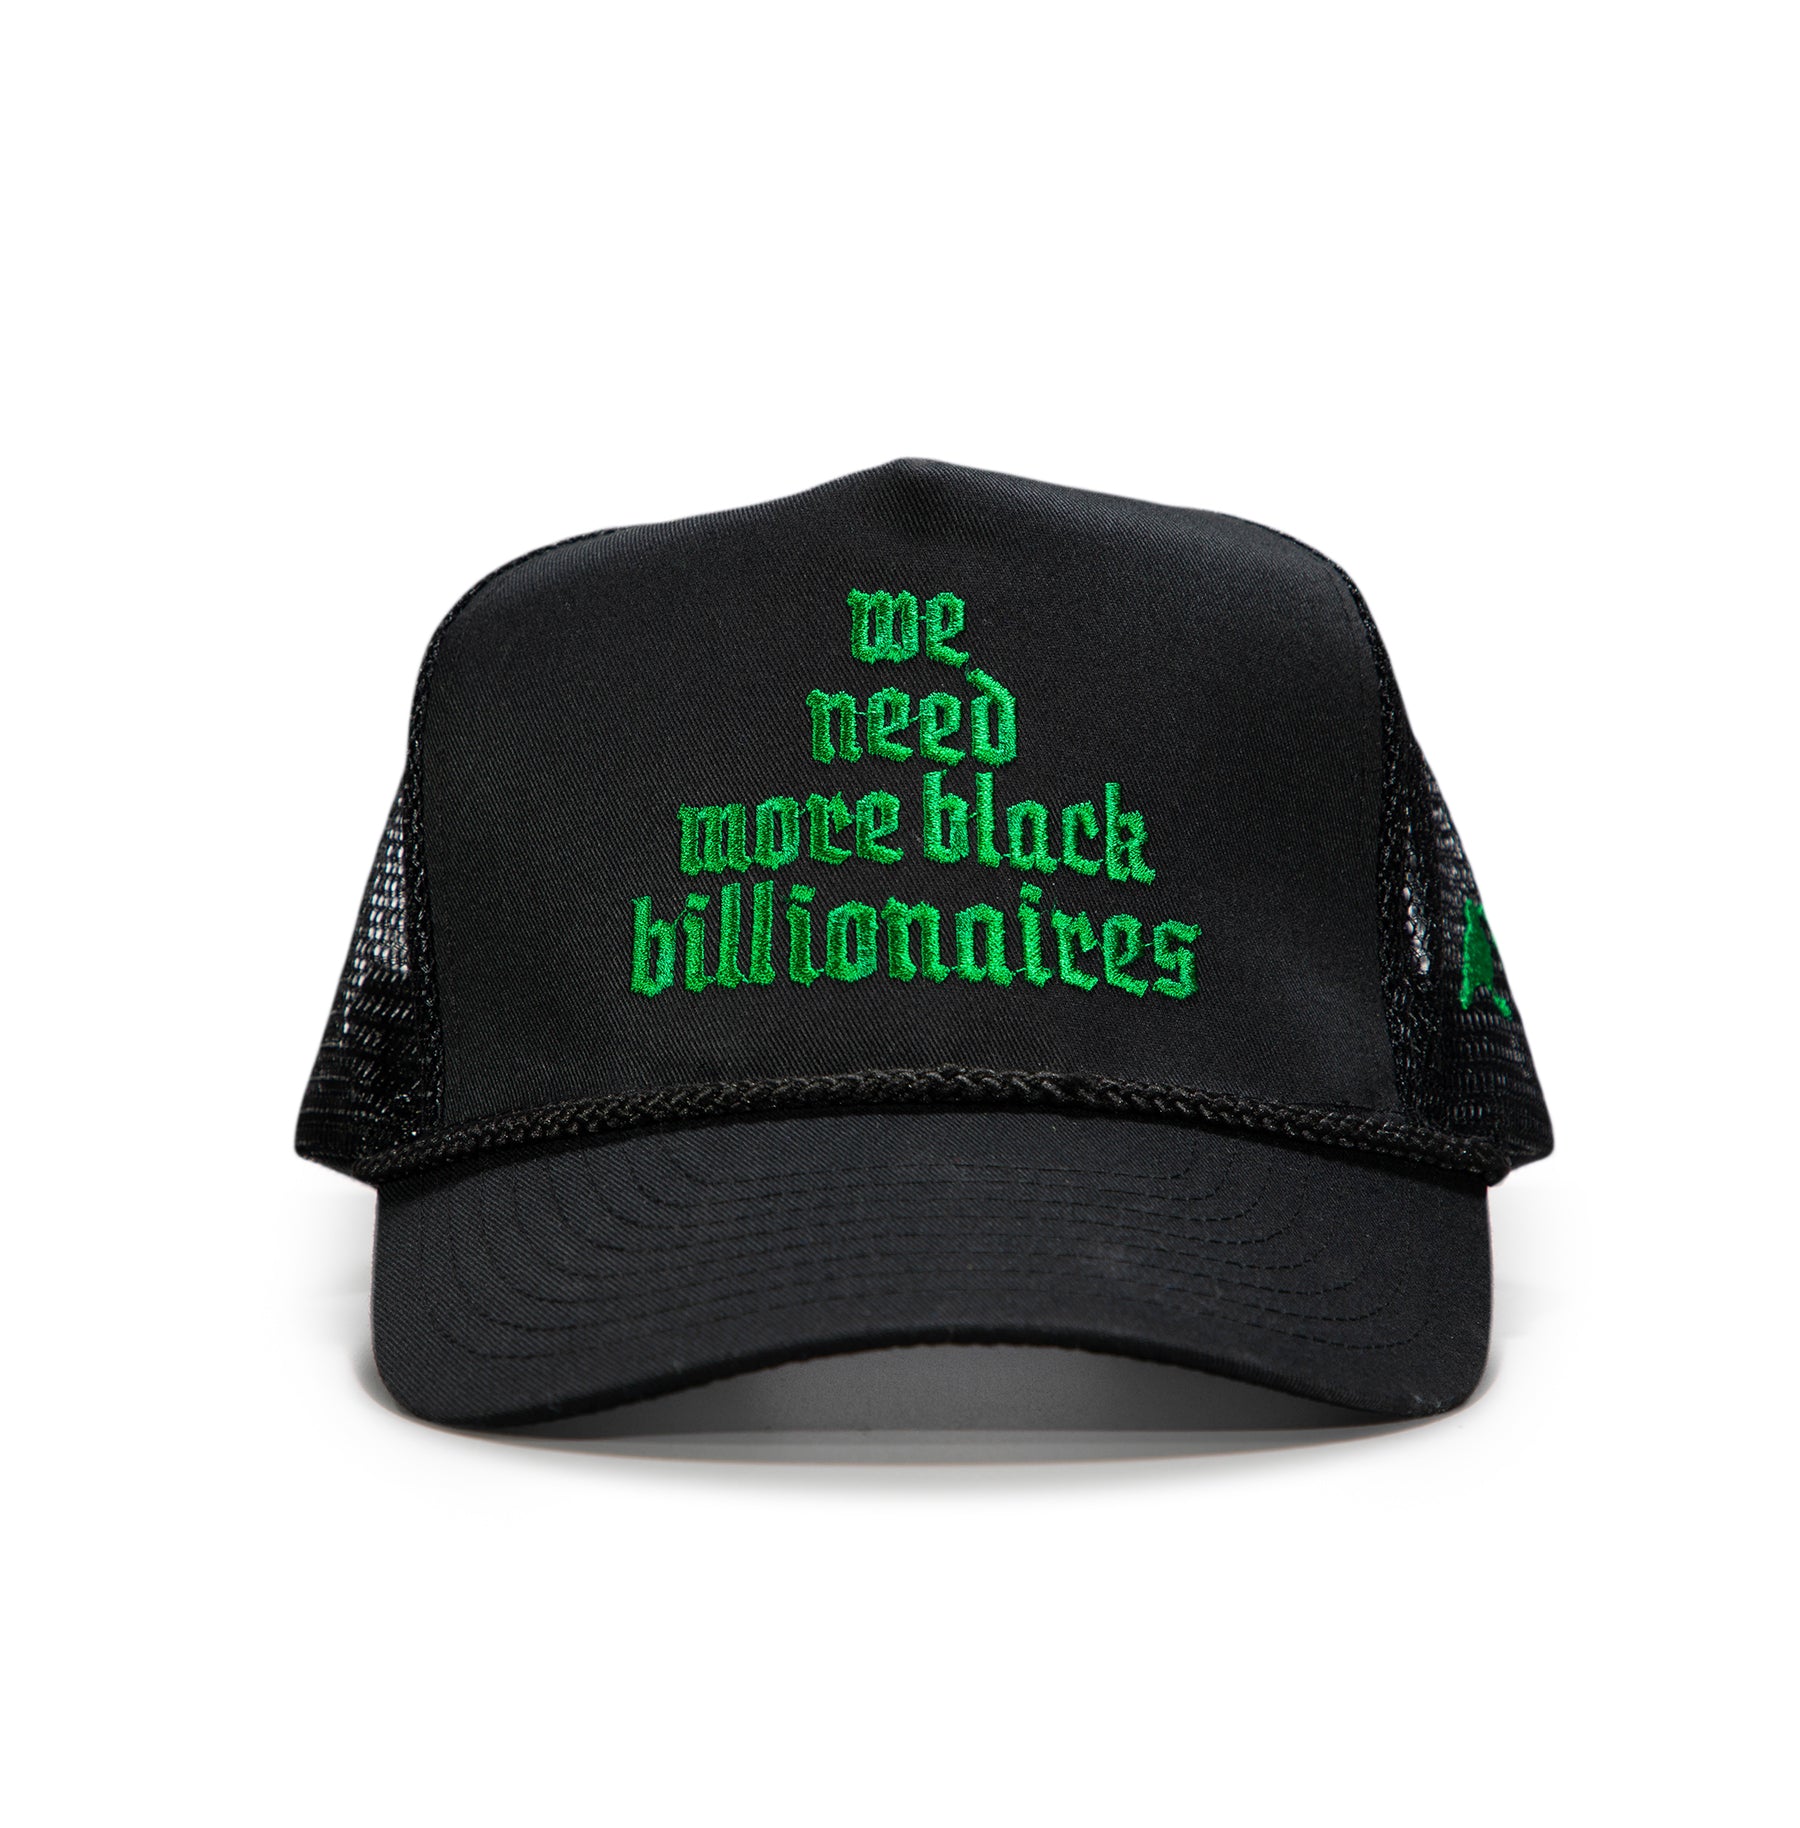 Need More Billionaires Trucker Hat - Bedstuyfly